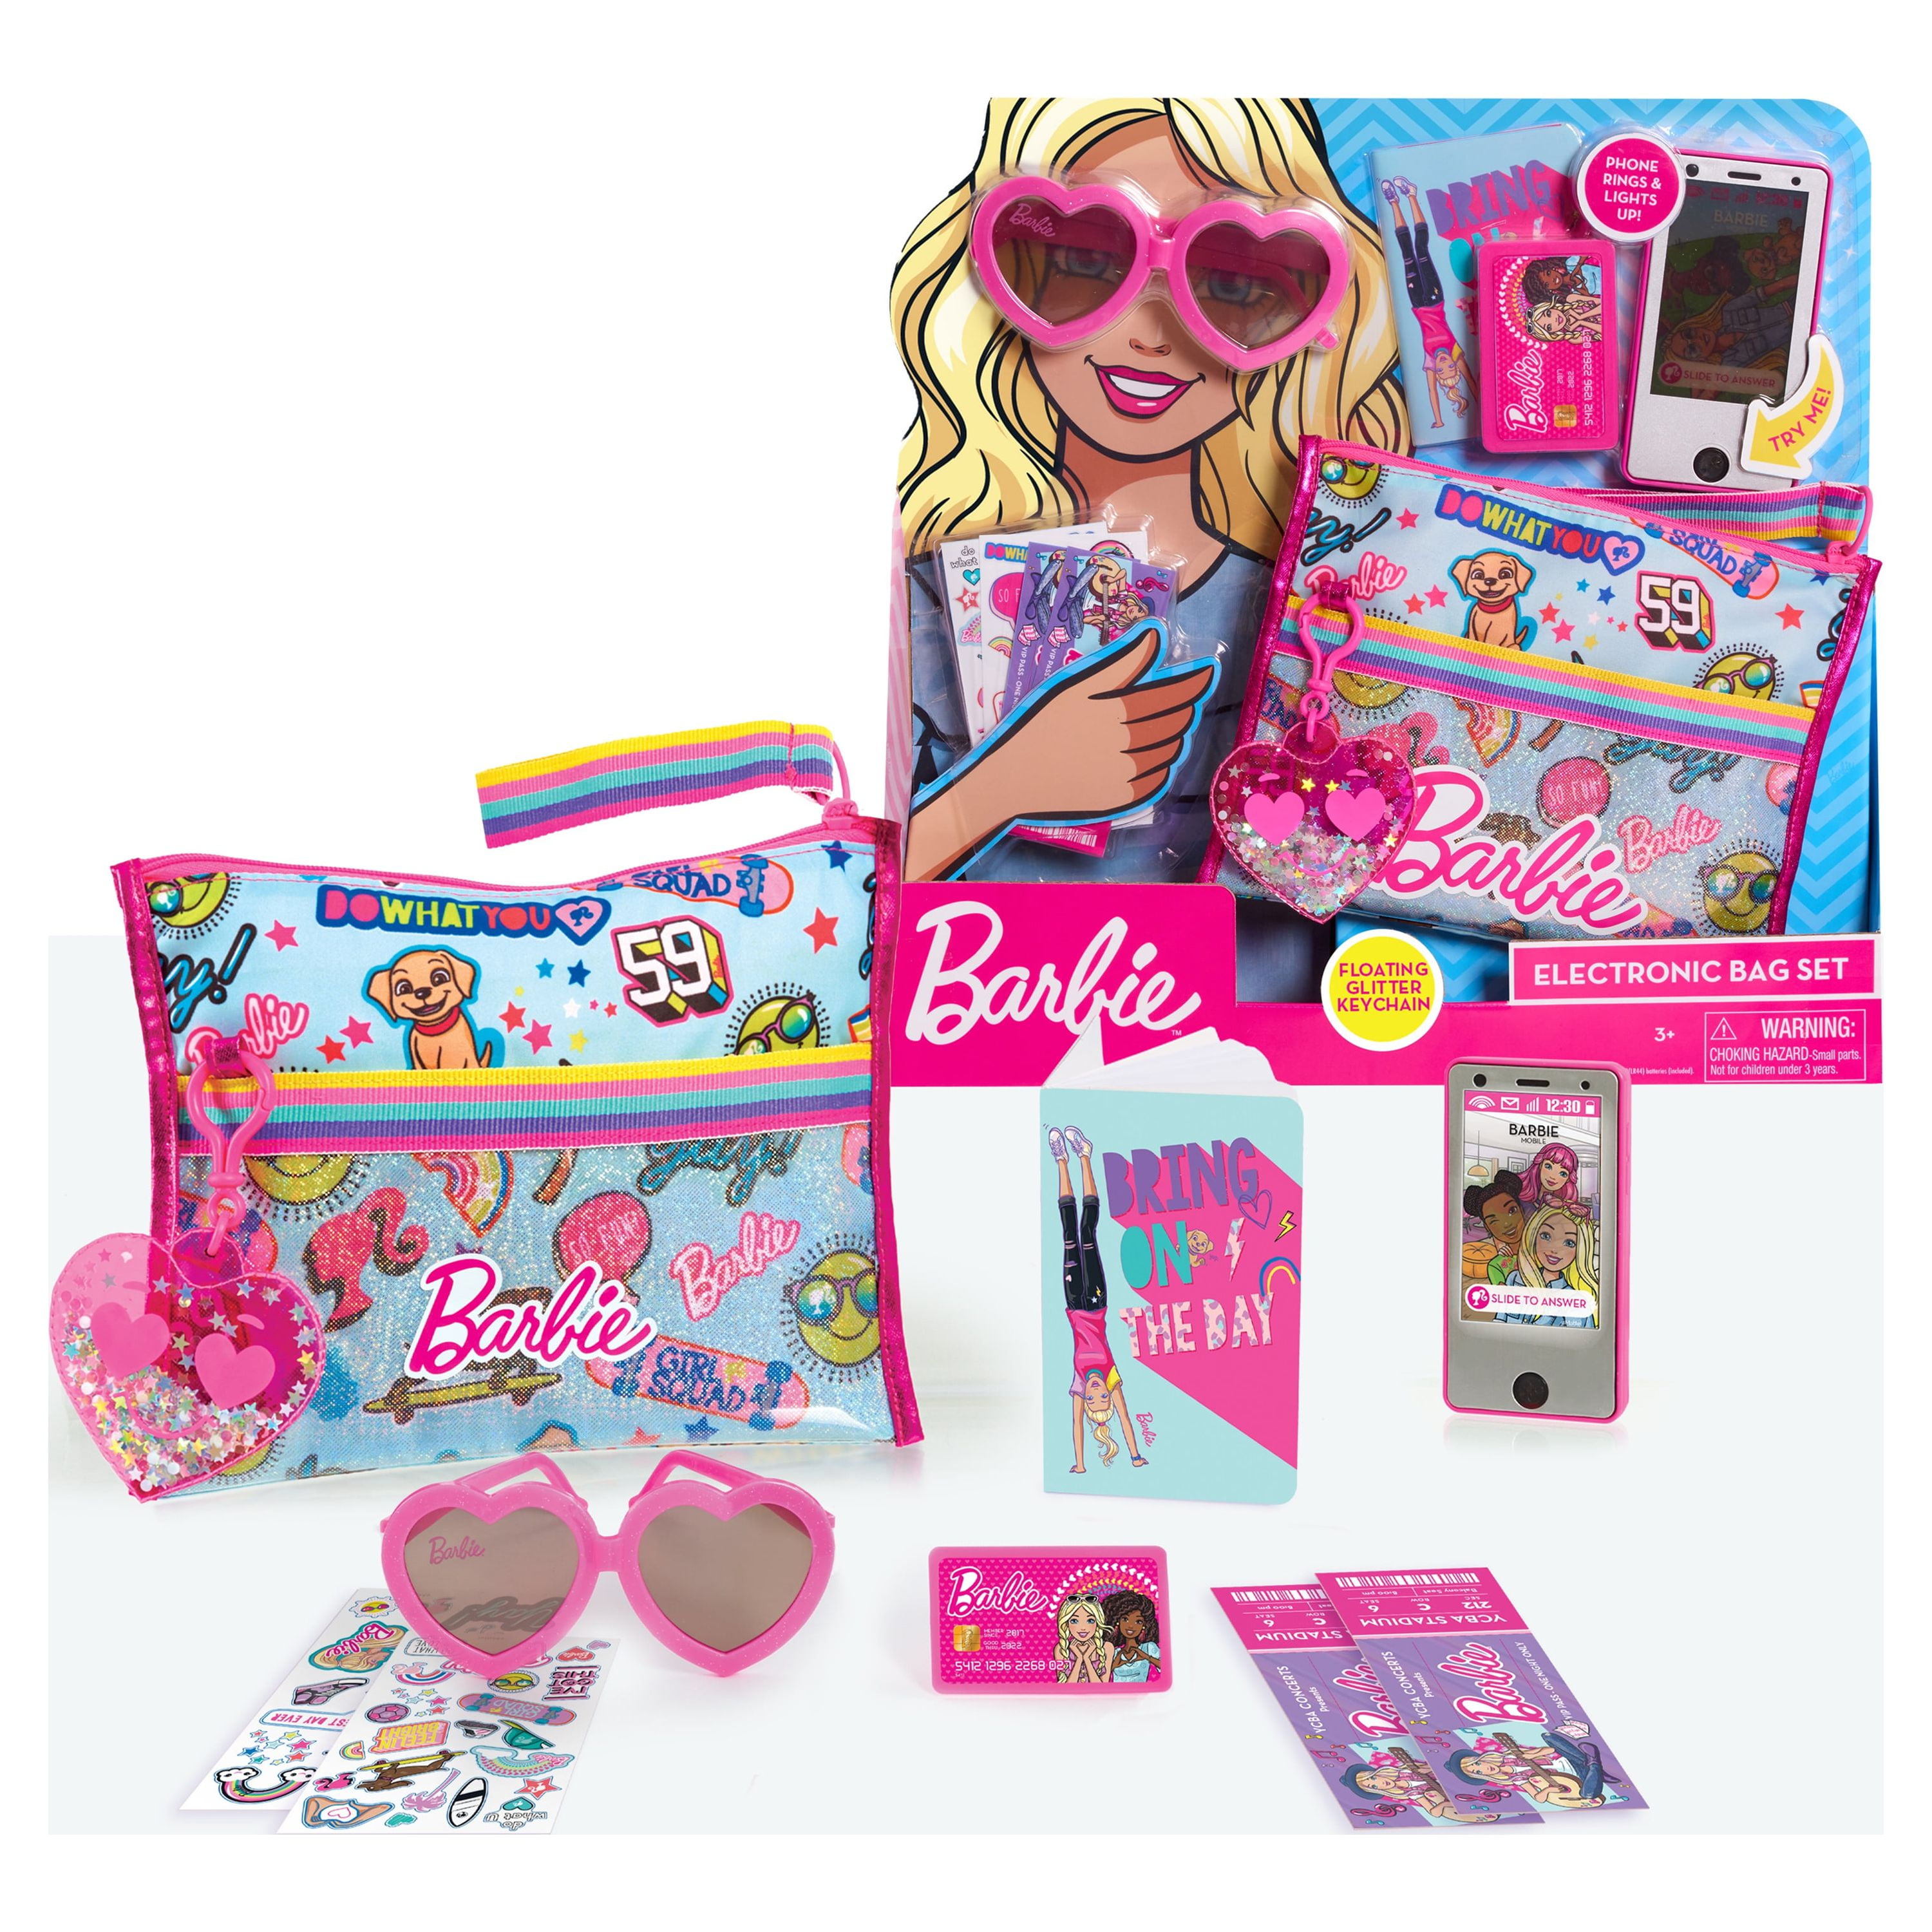 Barbie Keychain Glitter Pink,Barbie and Plus Barbie,Key Chain 